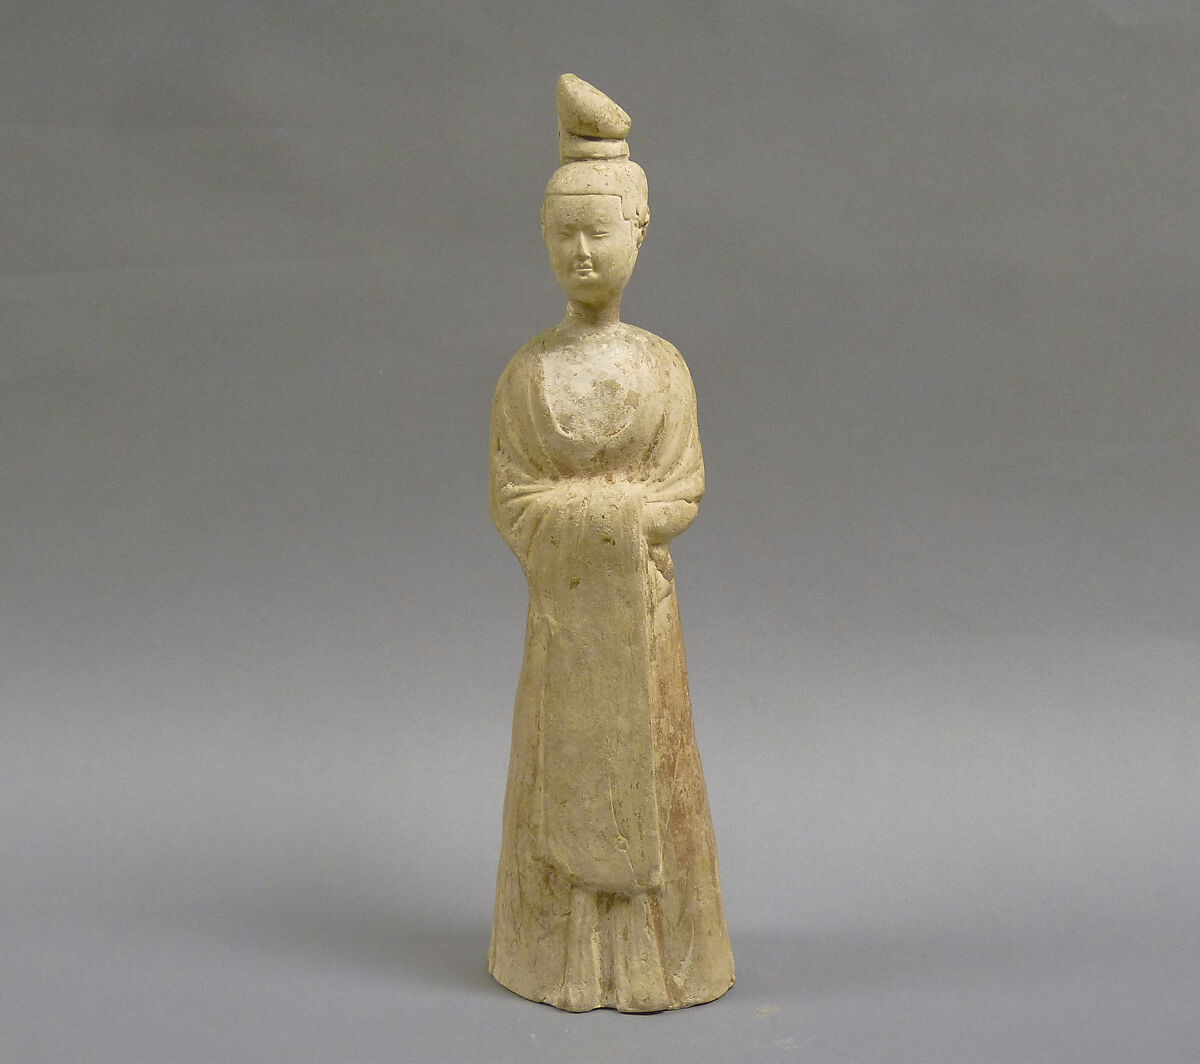 Figures, Unglazed pottery; only b: pottery, unglazed, whitish with traces of polychrome, China 